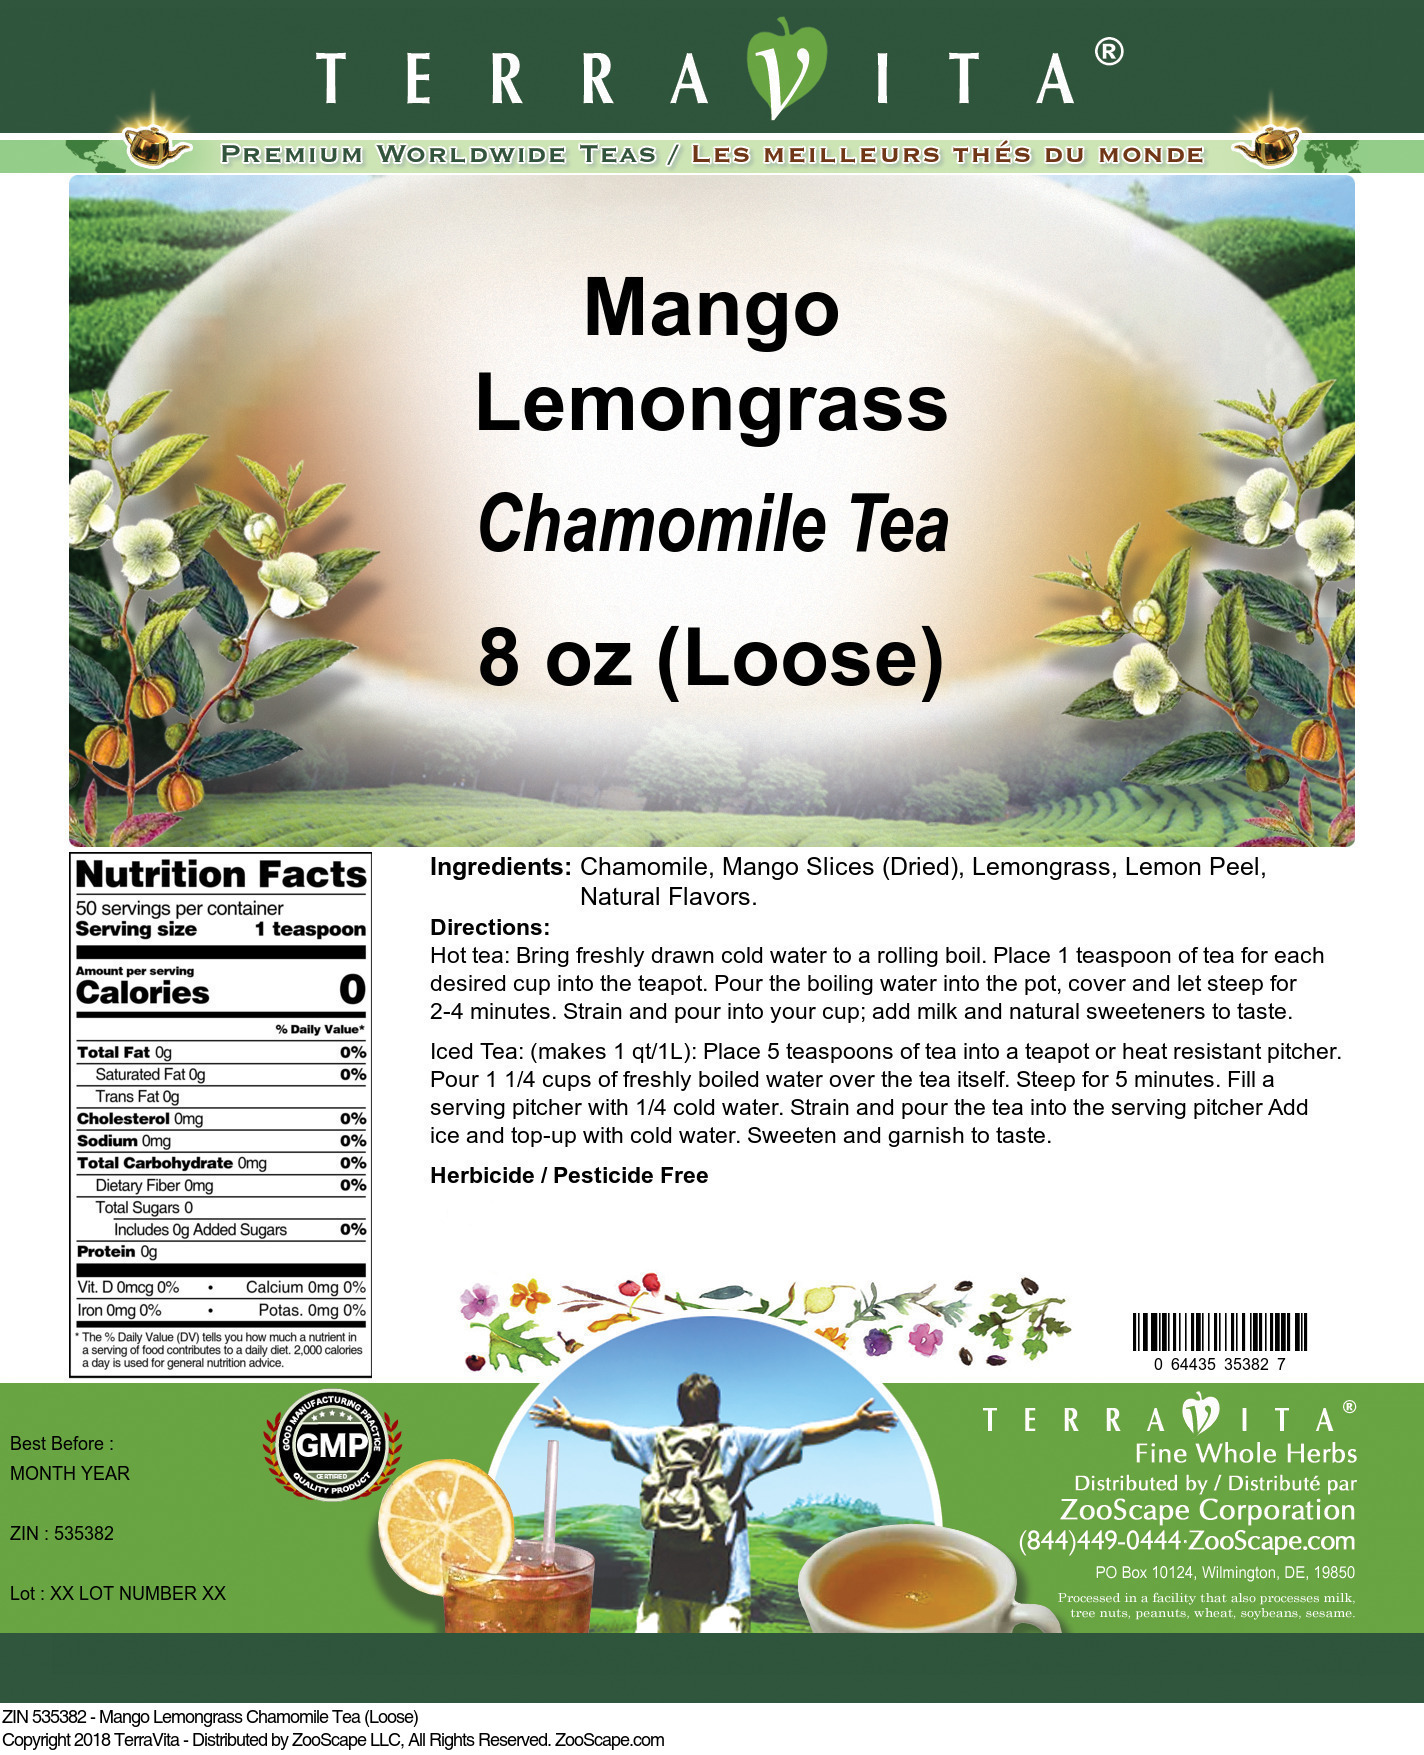 Mango Lemongrass Chamomile Tea (Loose) - Label